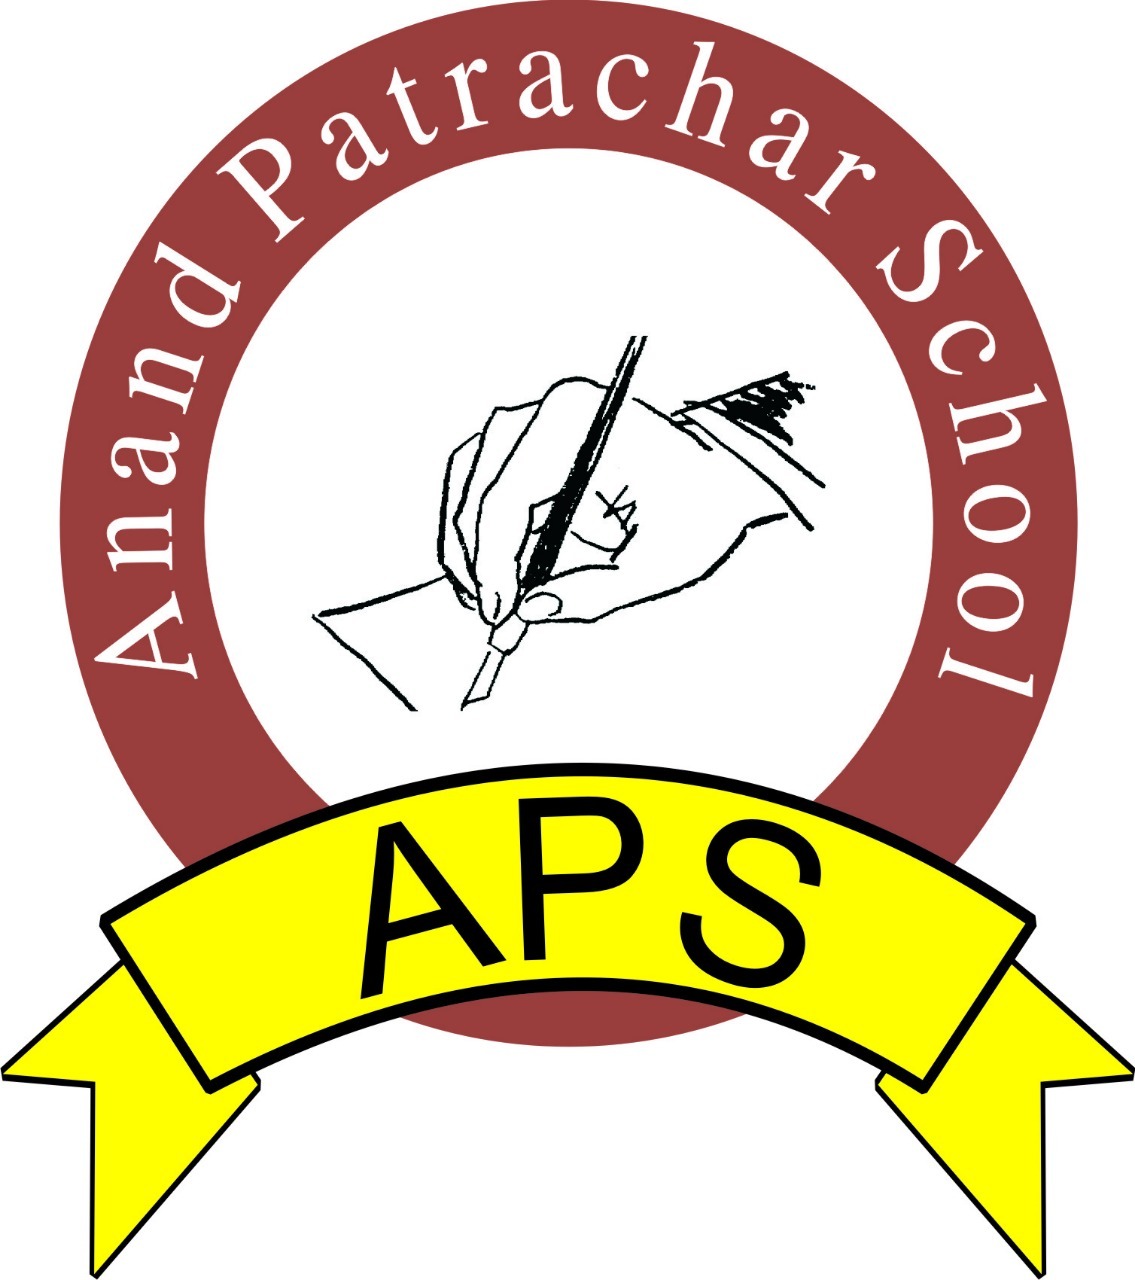 Anand Patrachar School